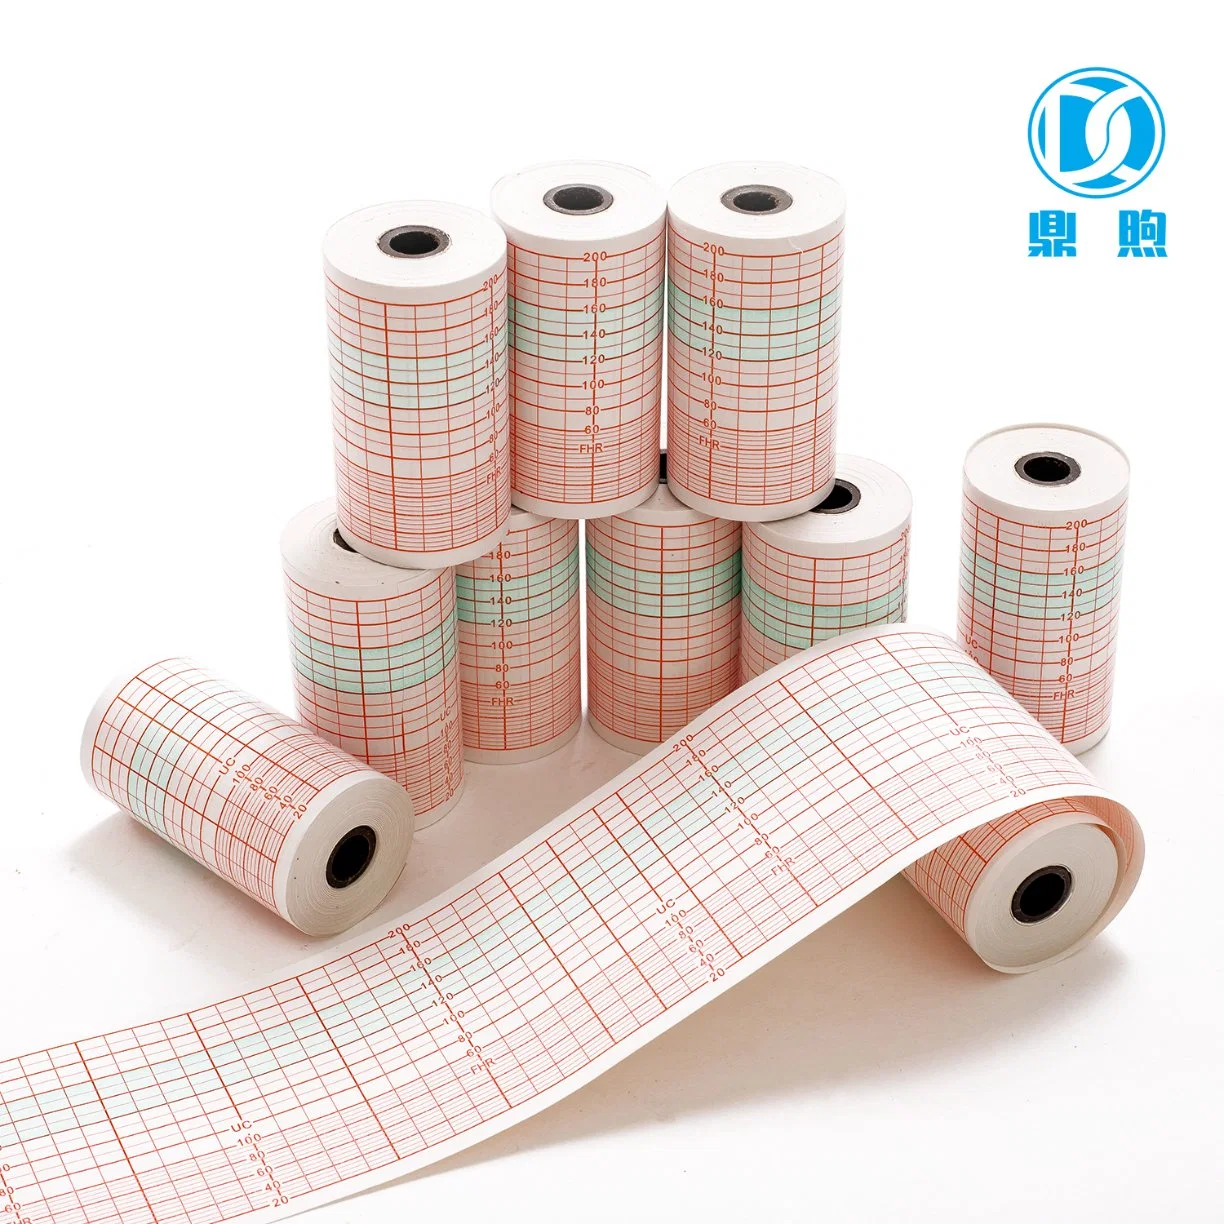 57mm * 30m Medical Printing Paper Roll EKG/CTG Paper for Hospital Use